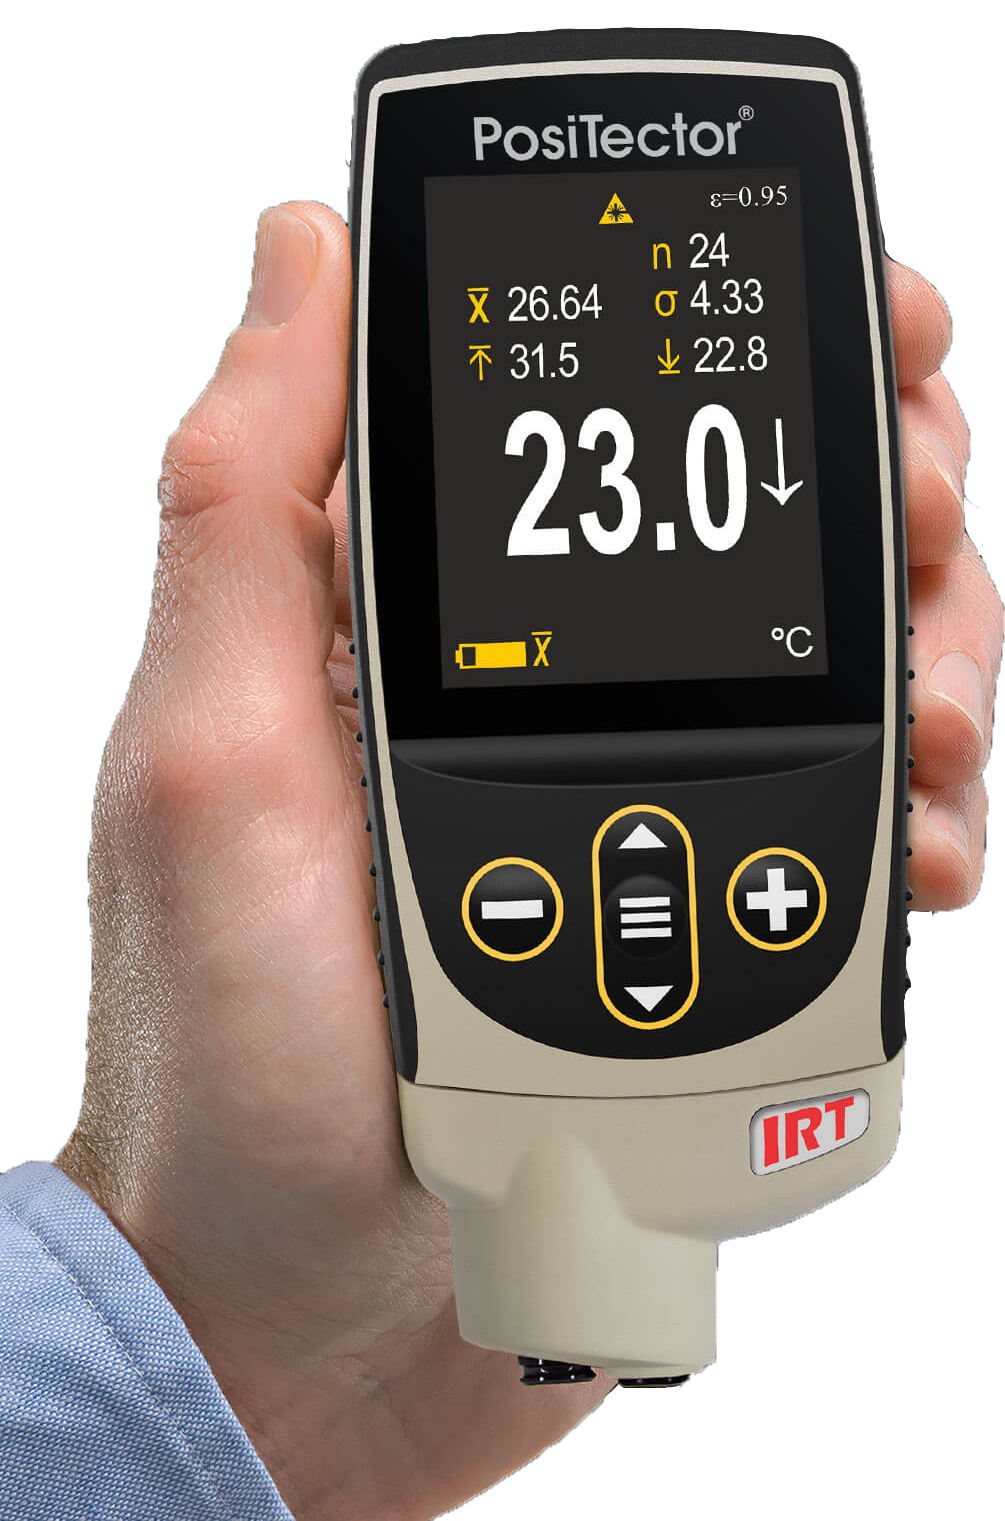 Digital -50-800°C Infrared Thermometer Bluetooth Temperature Gun Phone APP  Meter